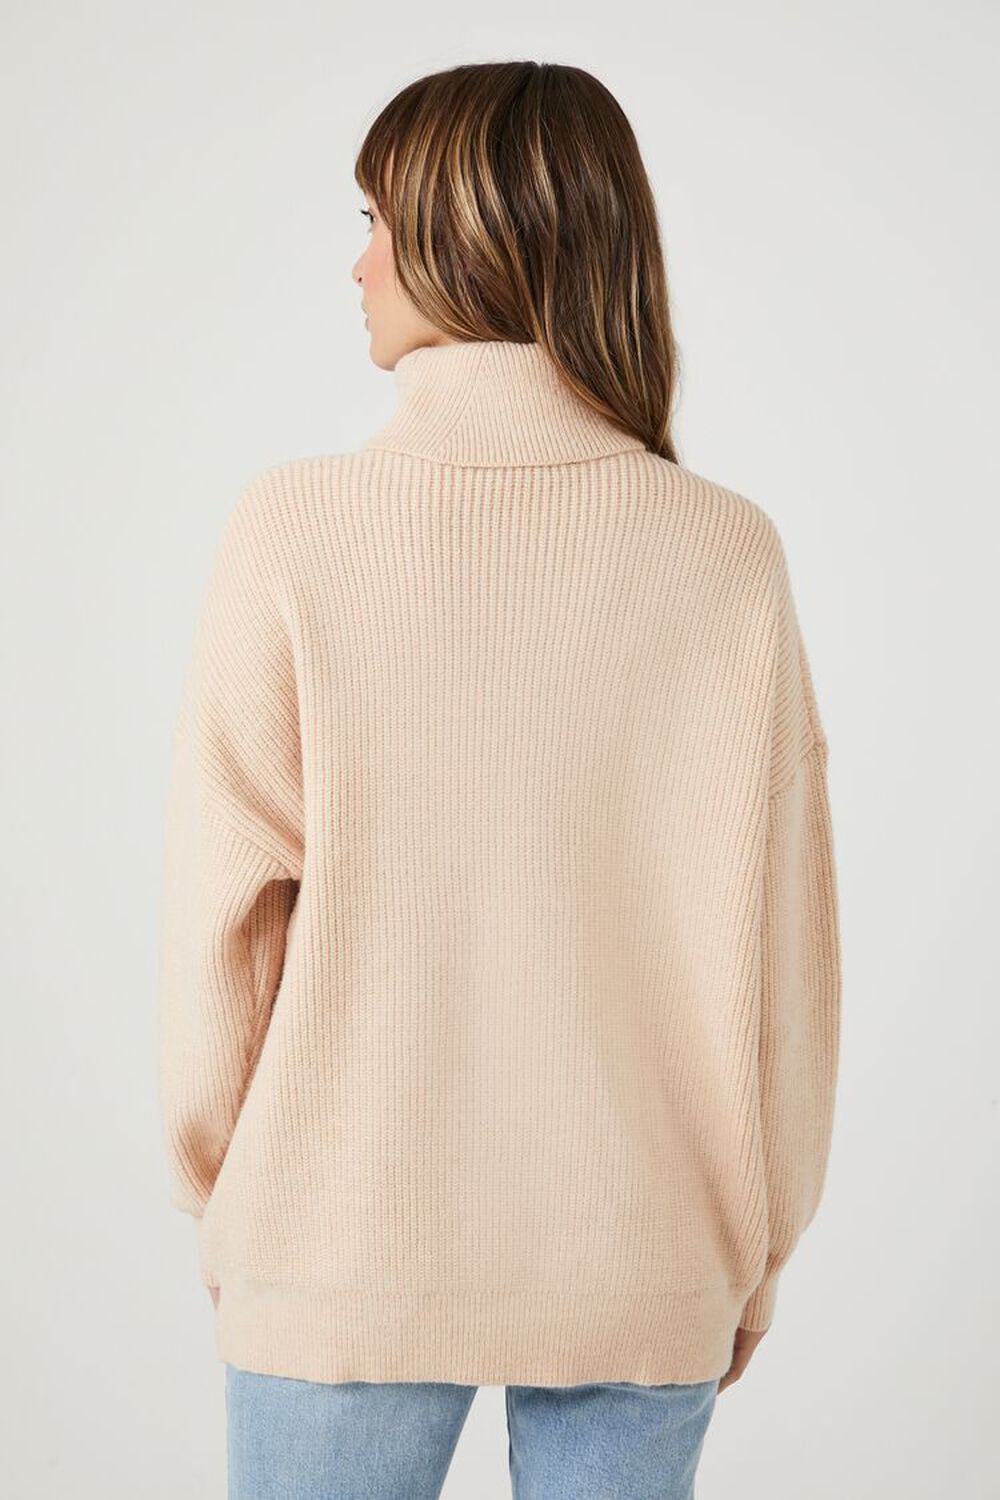 Ribbed Knit Turtleneck Sweater, image 3